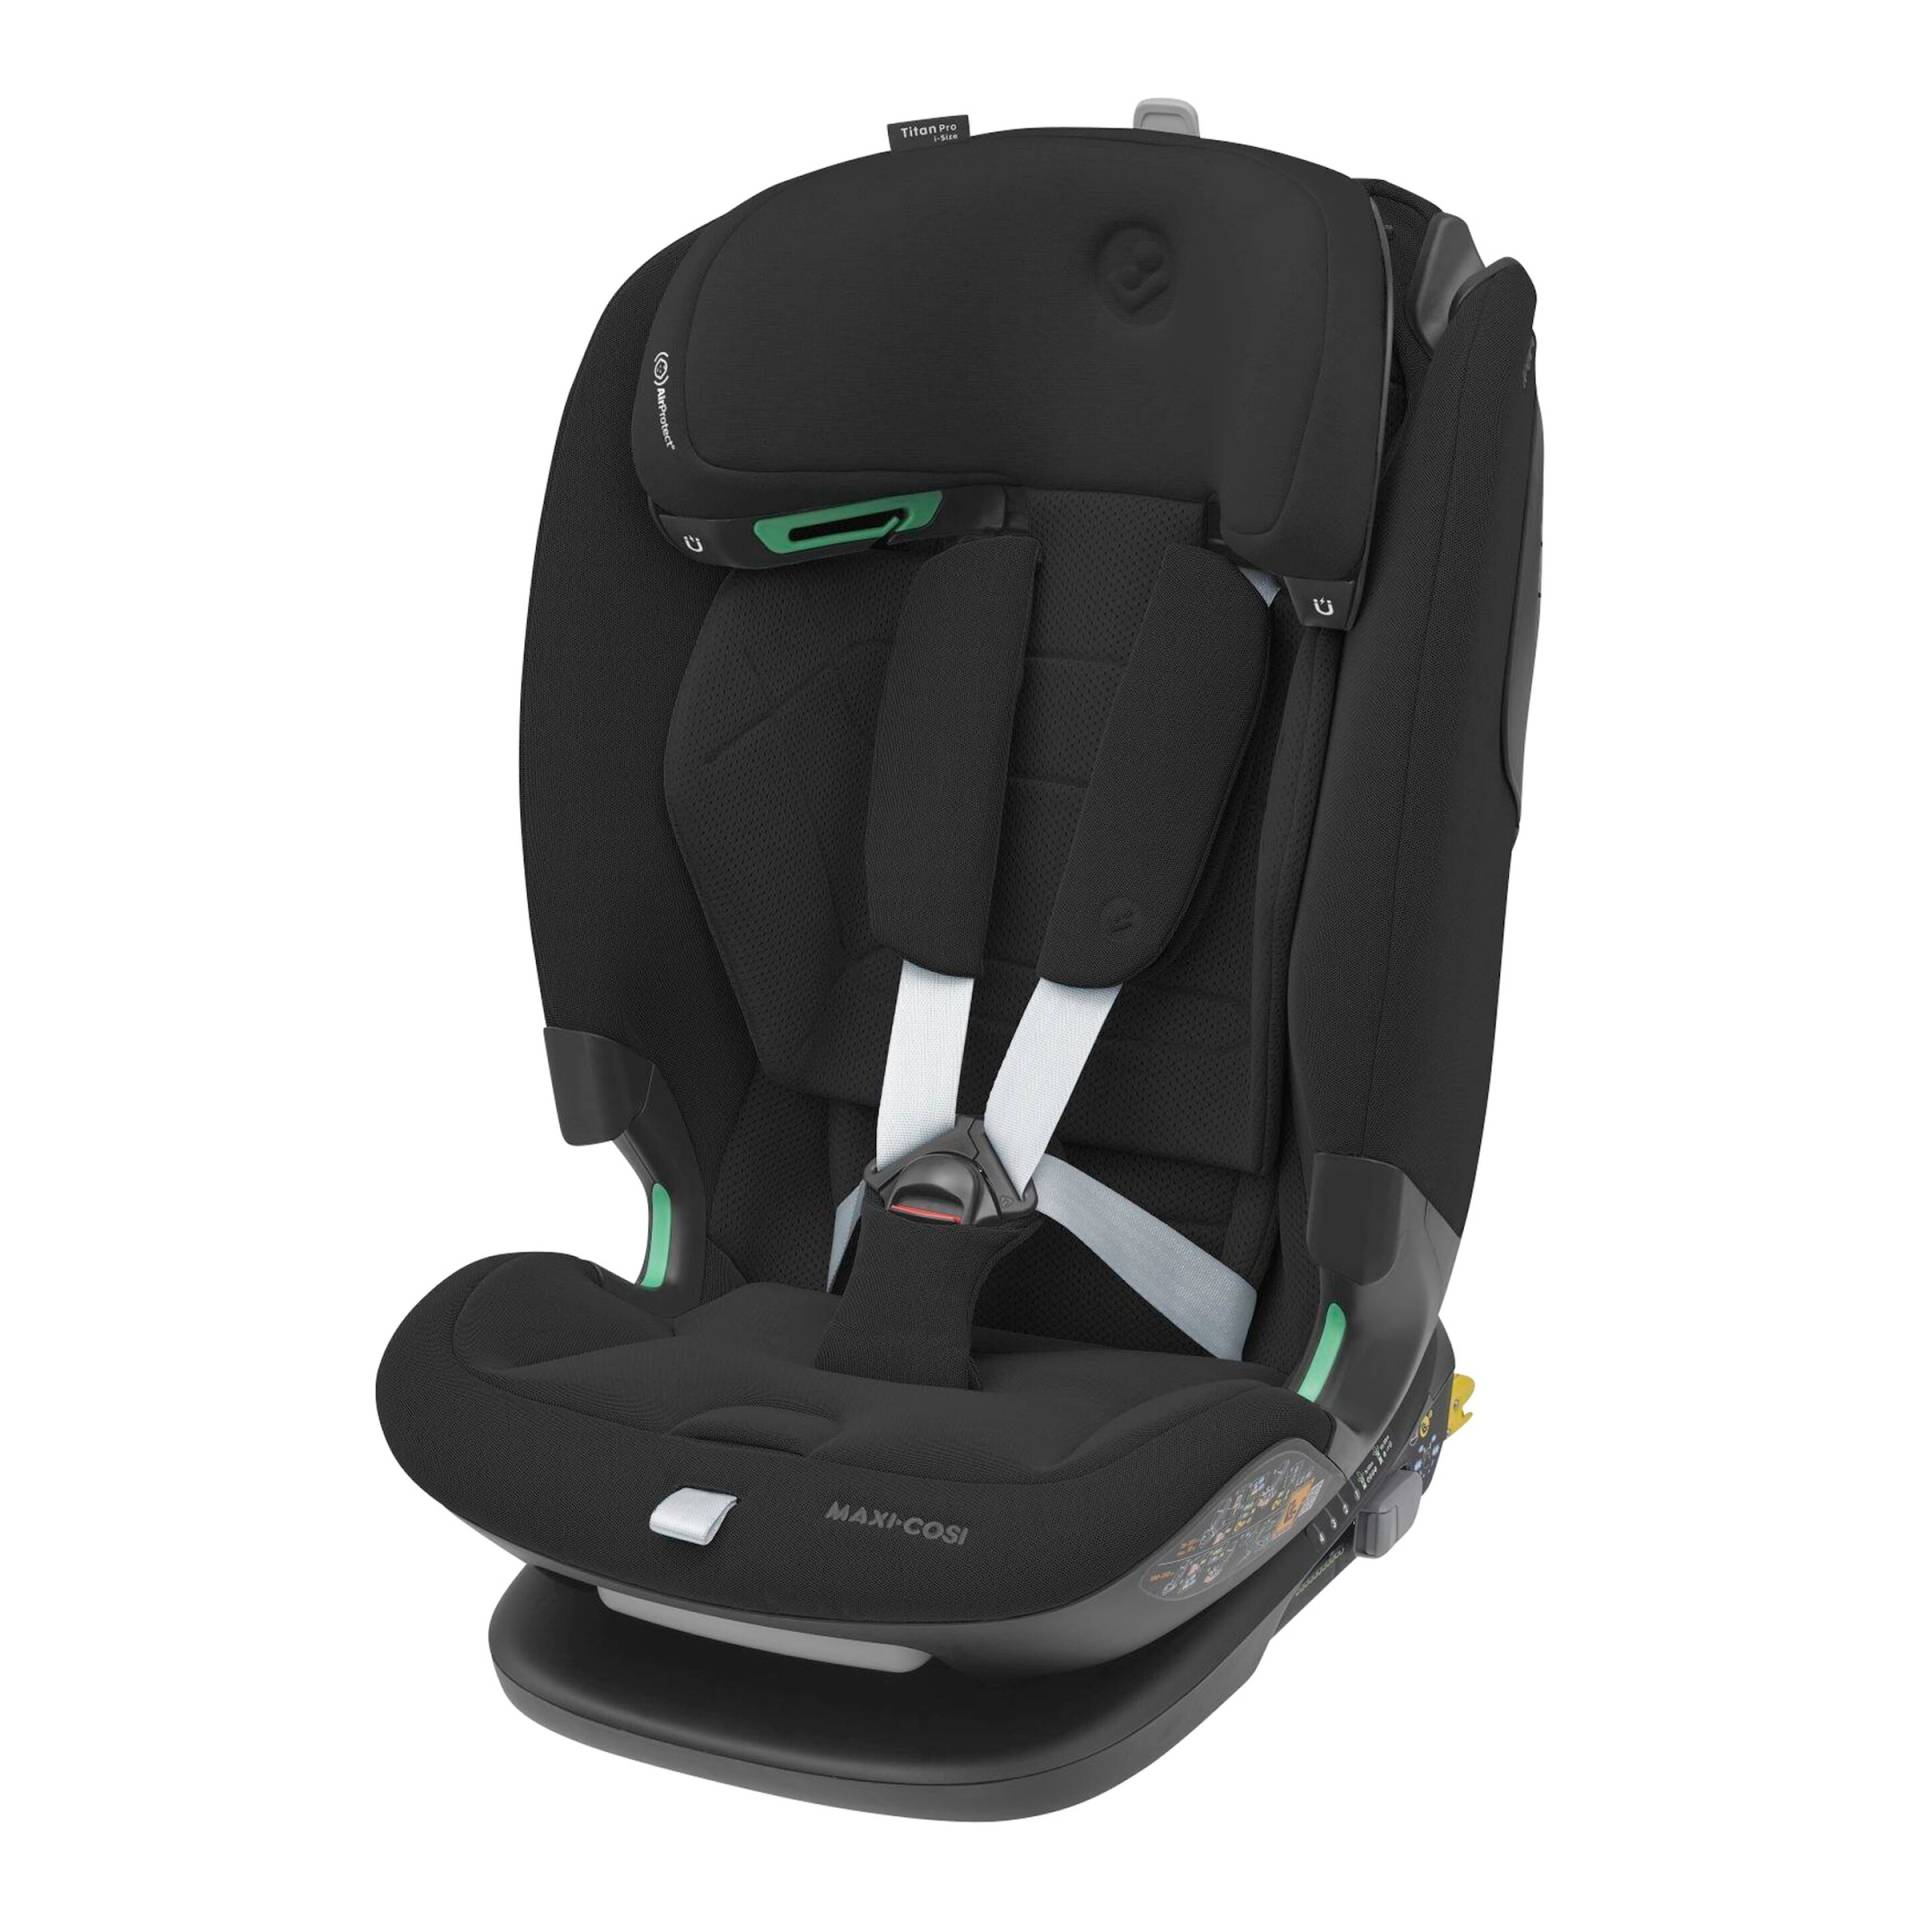 Kindersitz Titan Pro i-Size von Maxi-Cosi